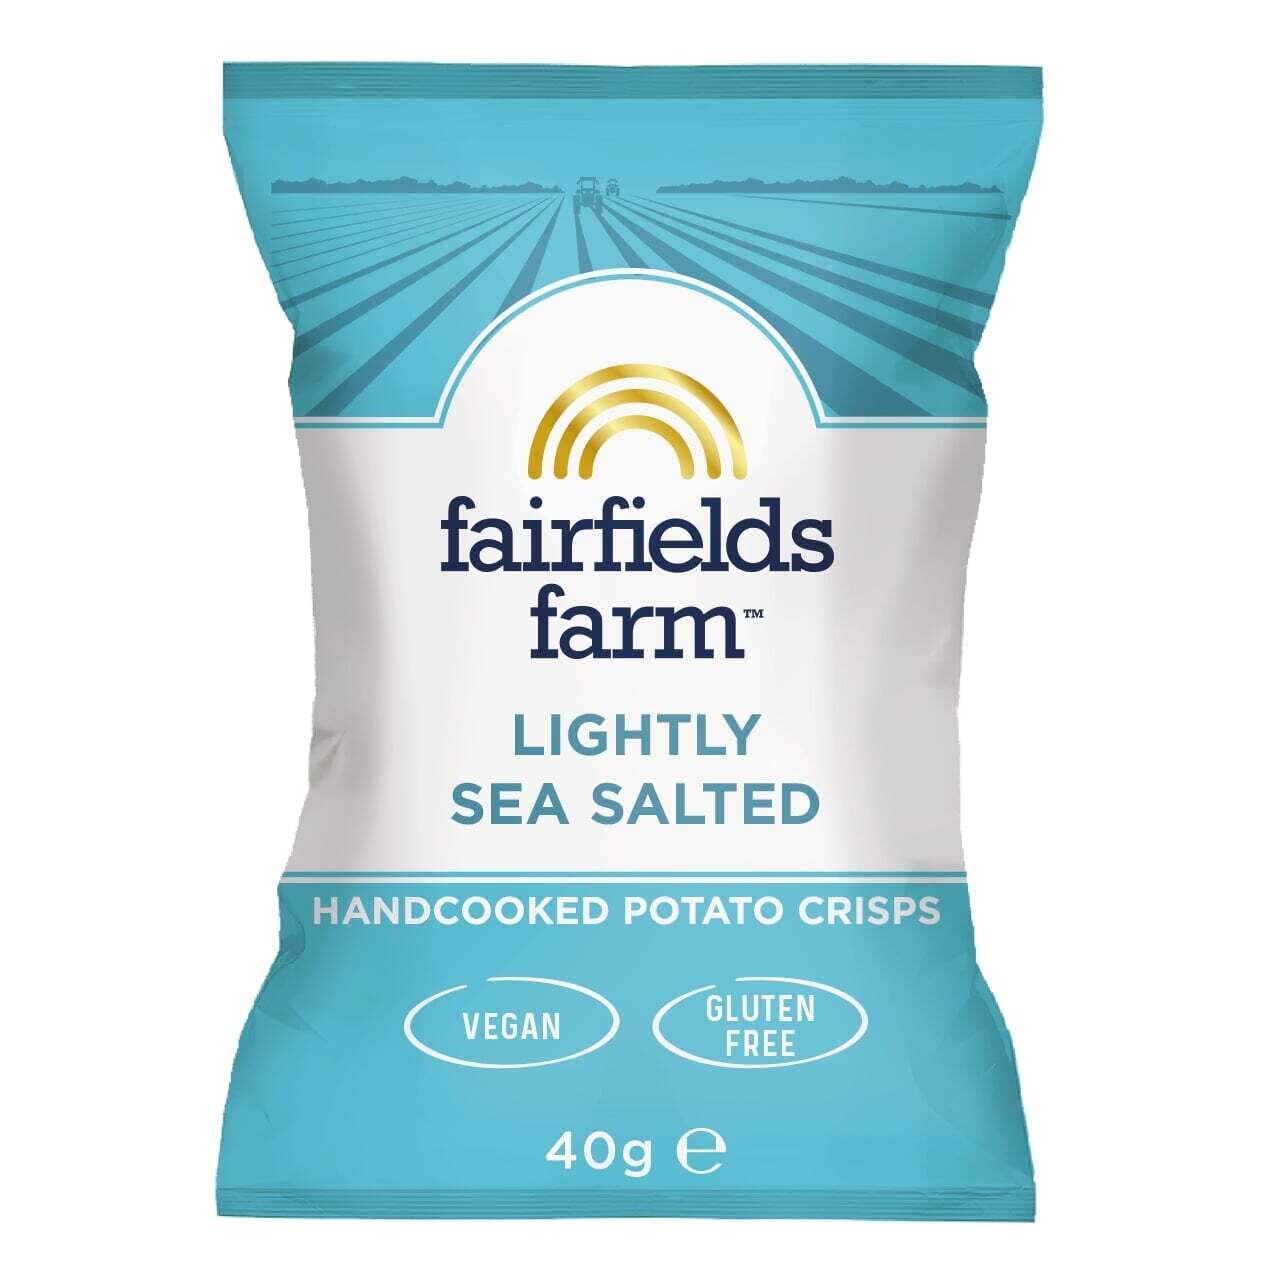 NEW IN! Fairfields Farm- Lightly Salted